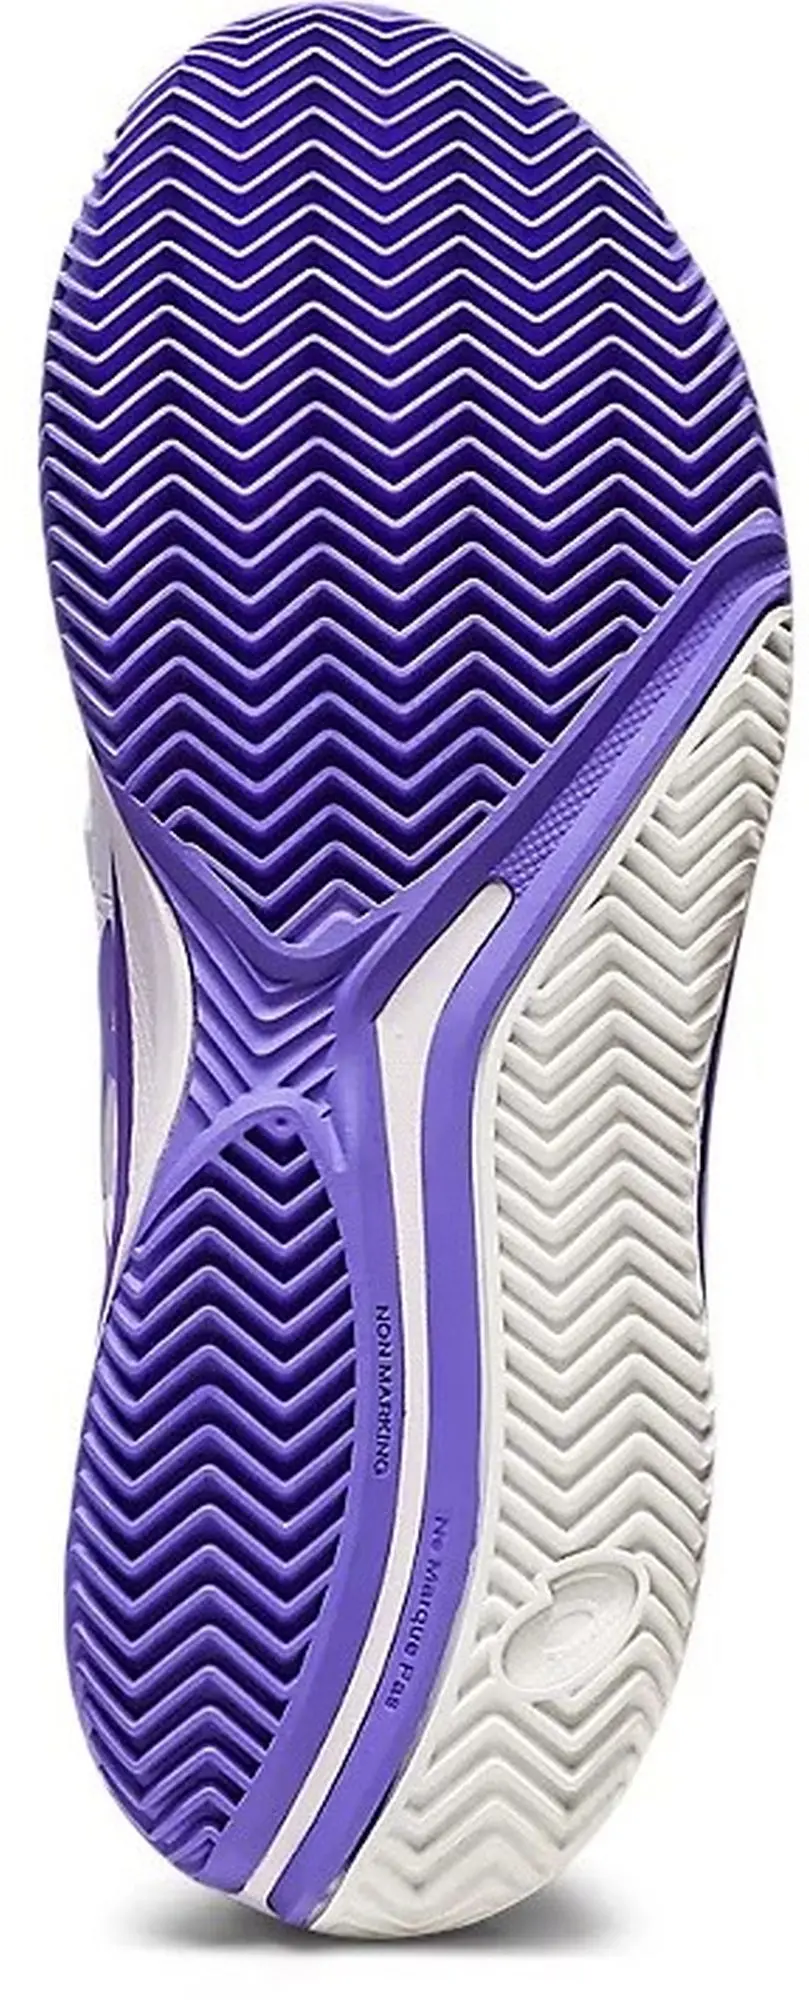 Asics Gel Resolution 9 Women's Tennis Shoes - White/Amethyst